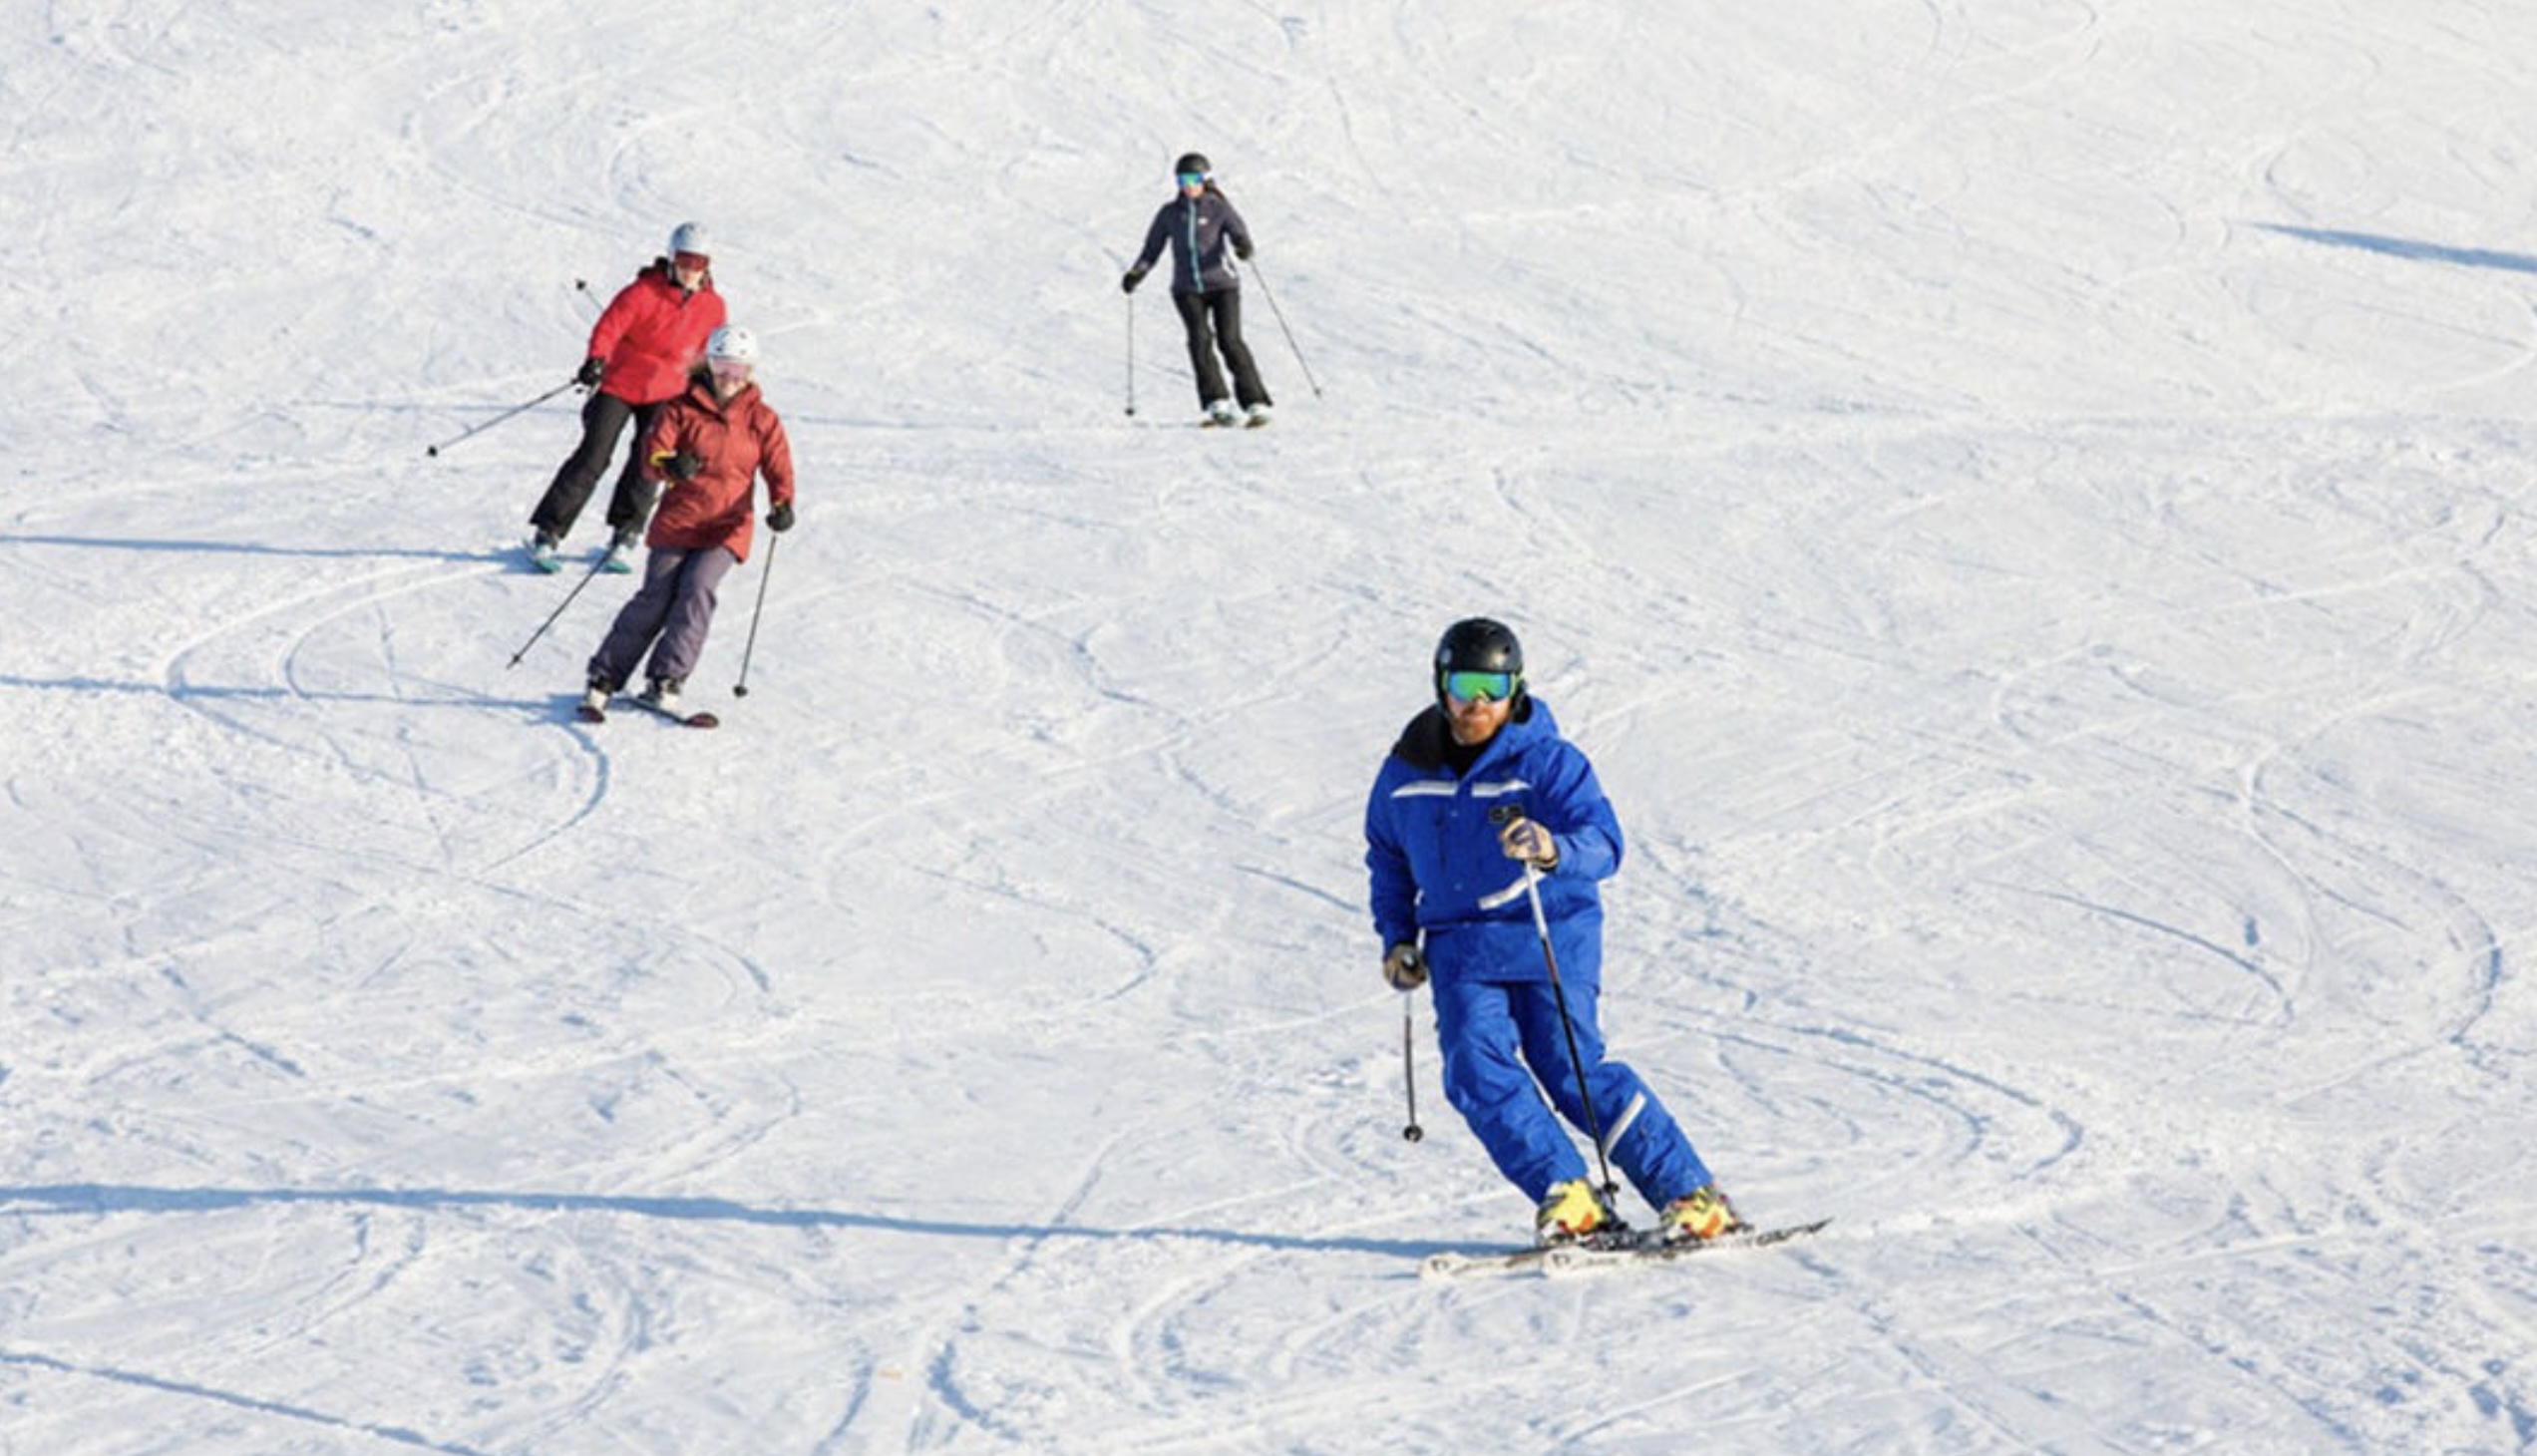 Colorado To Require Mandatory Ski Lesson For All Skiers Next Season